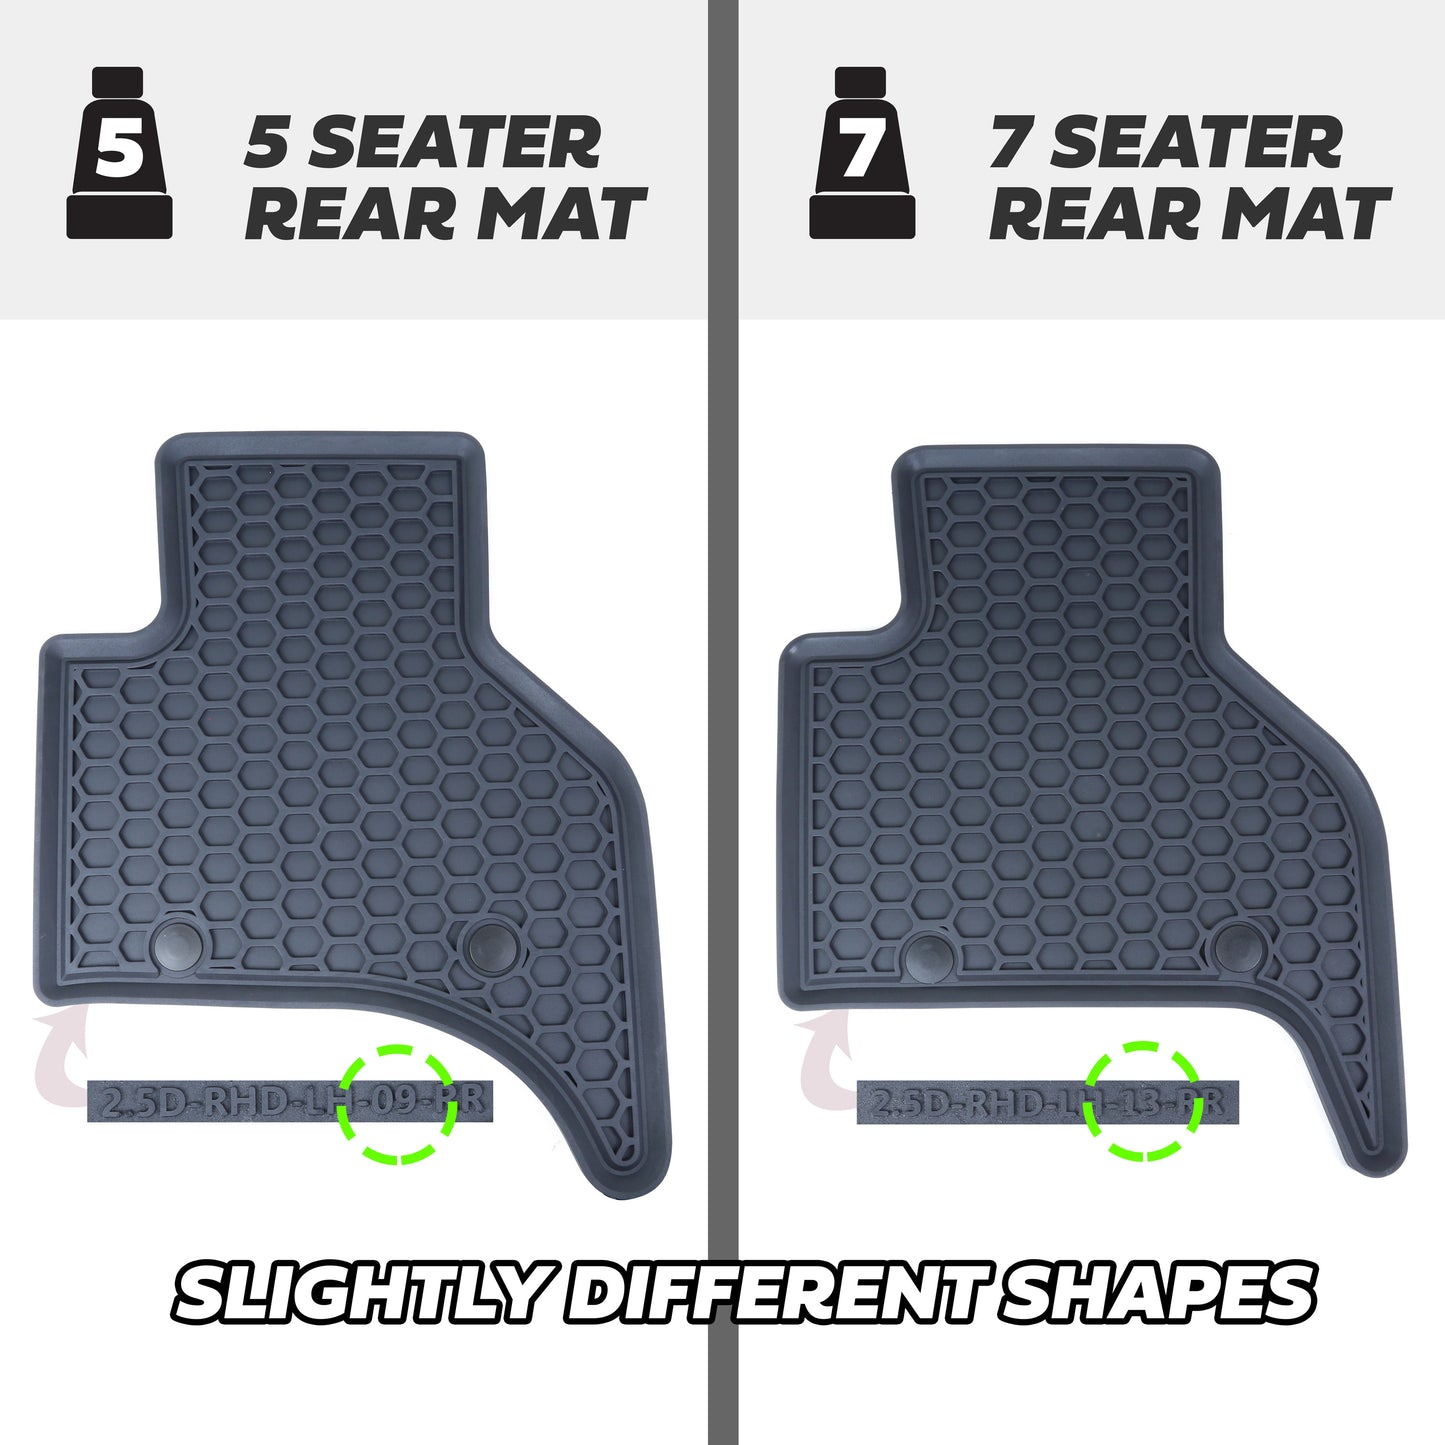 Rubber Floor Mat Set - RHD - for Land Rover Defender L663 (110) - 7 seat